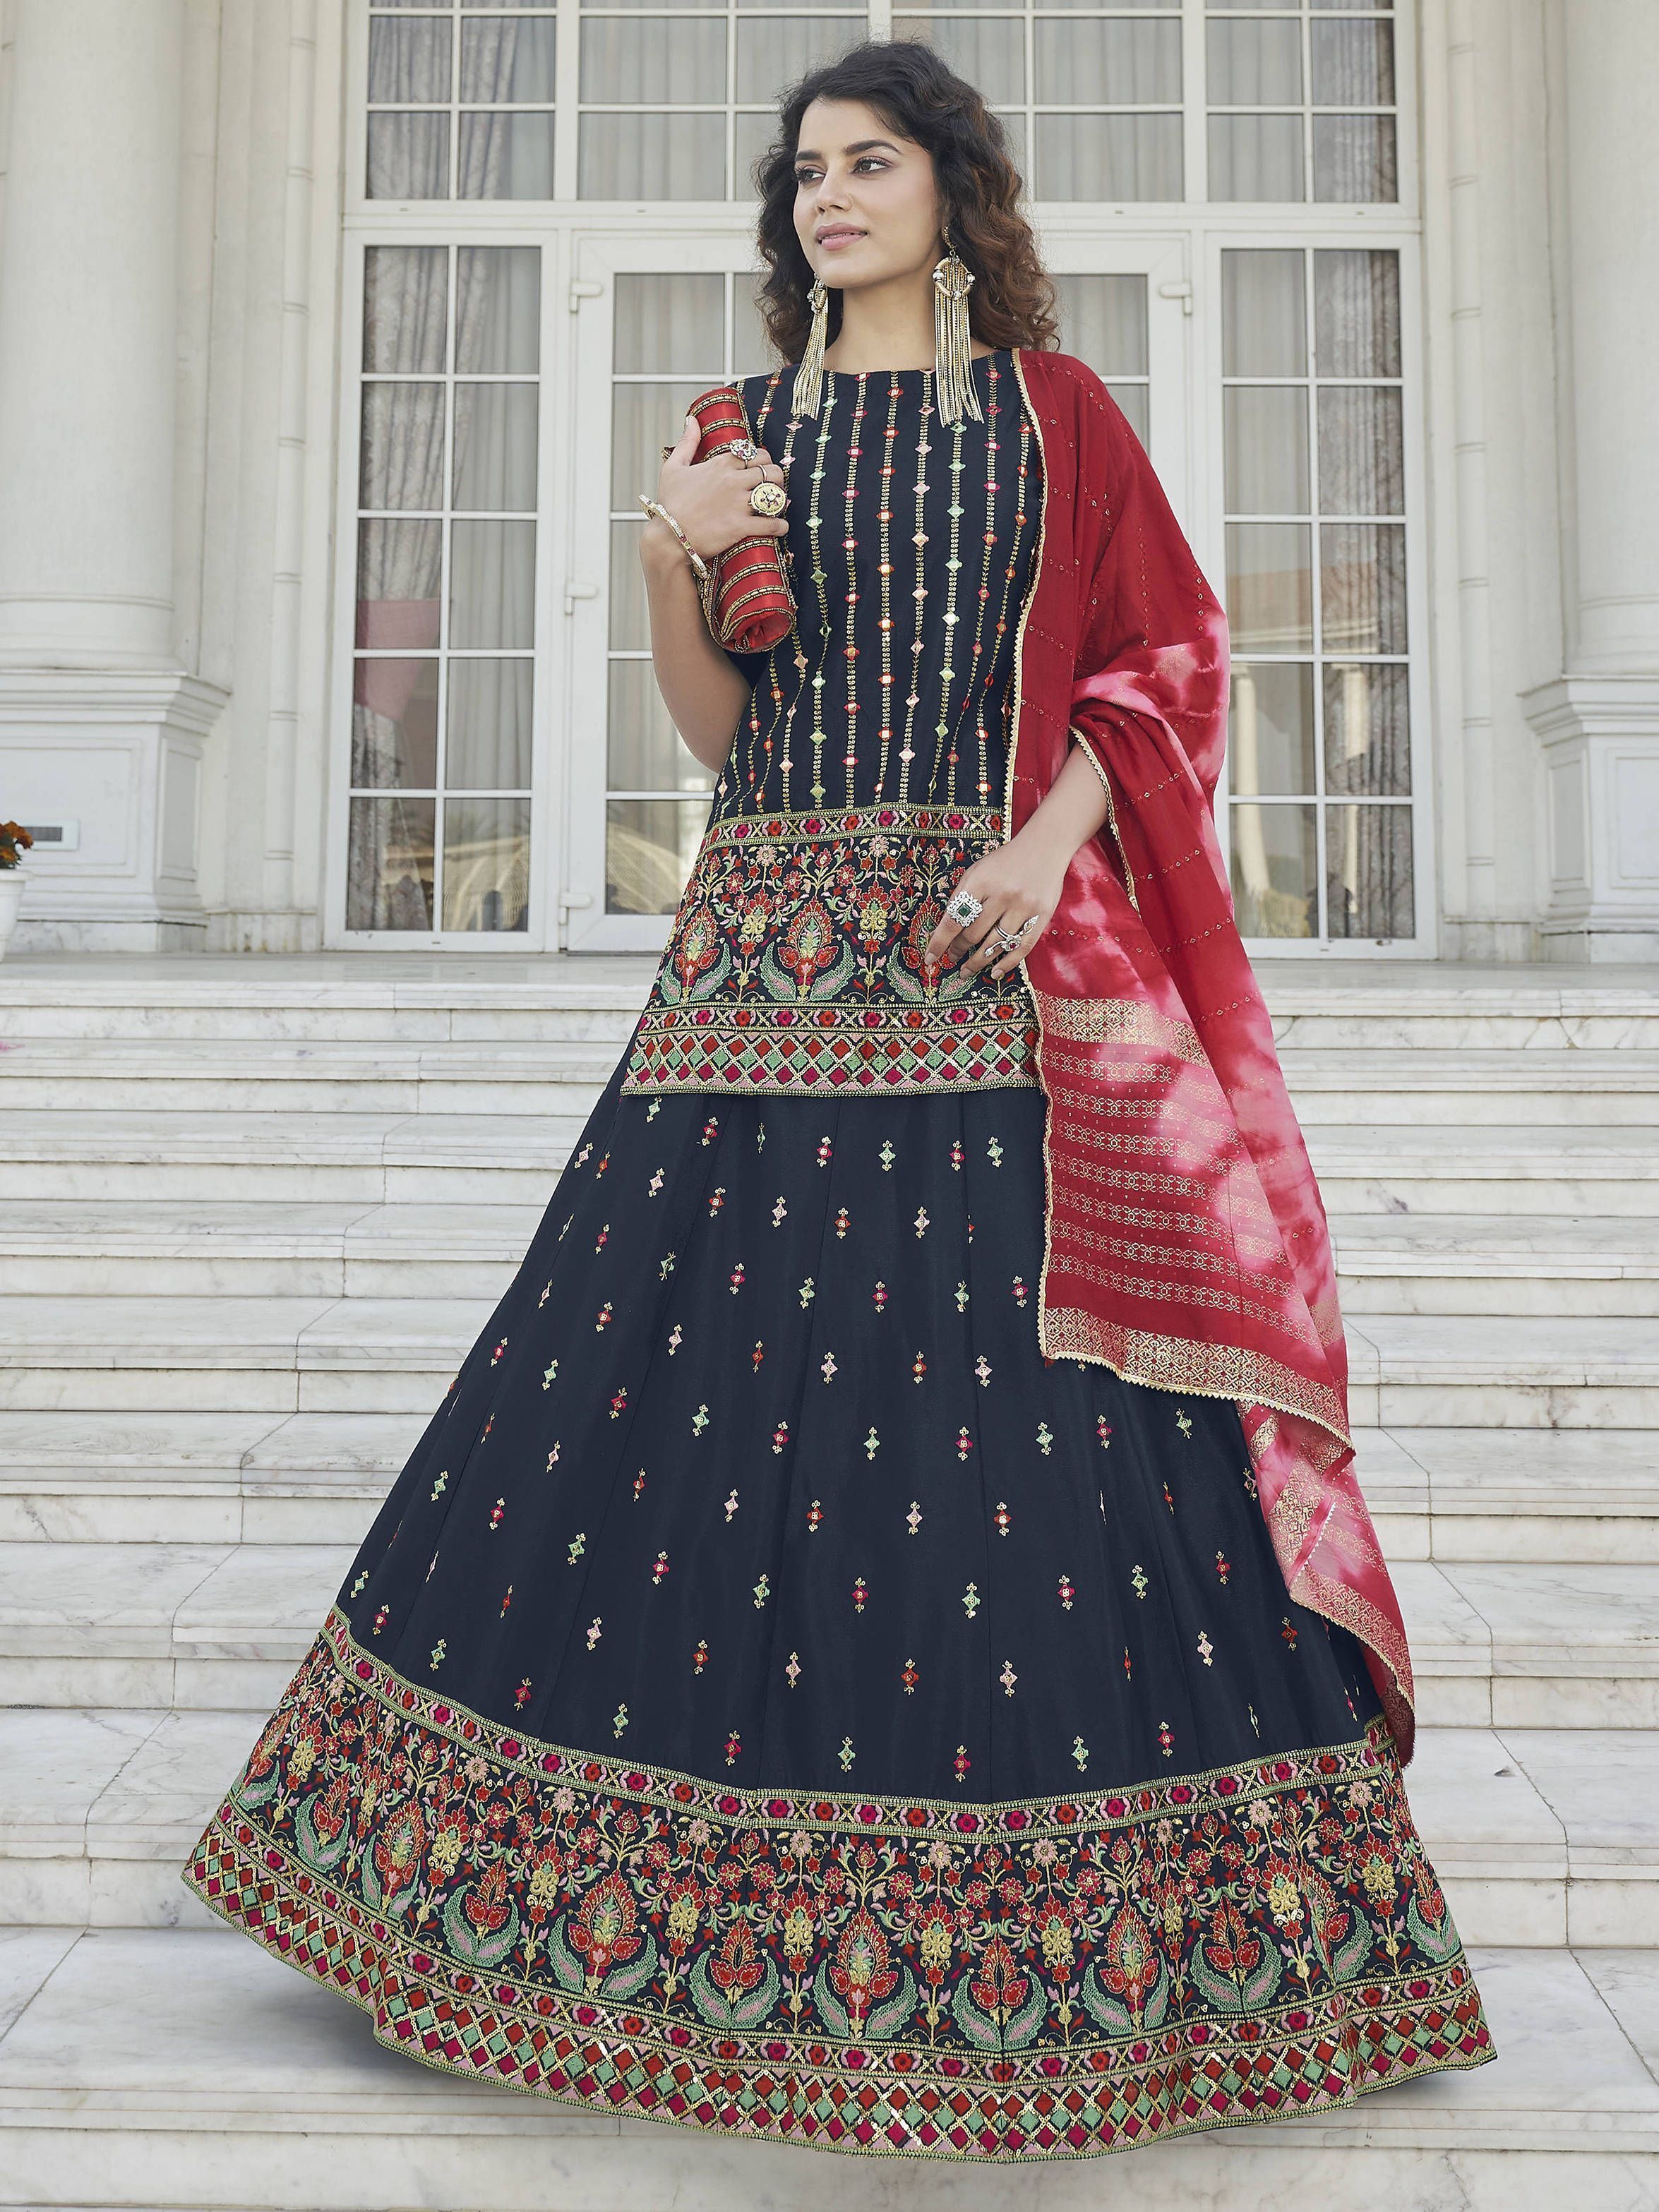 Pin on Rajasthani dress